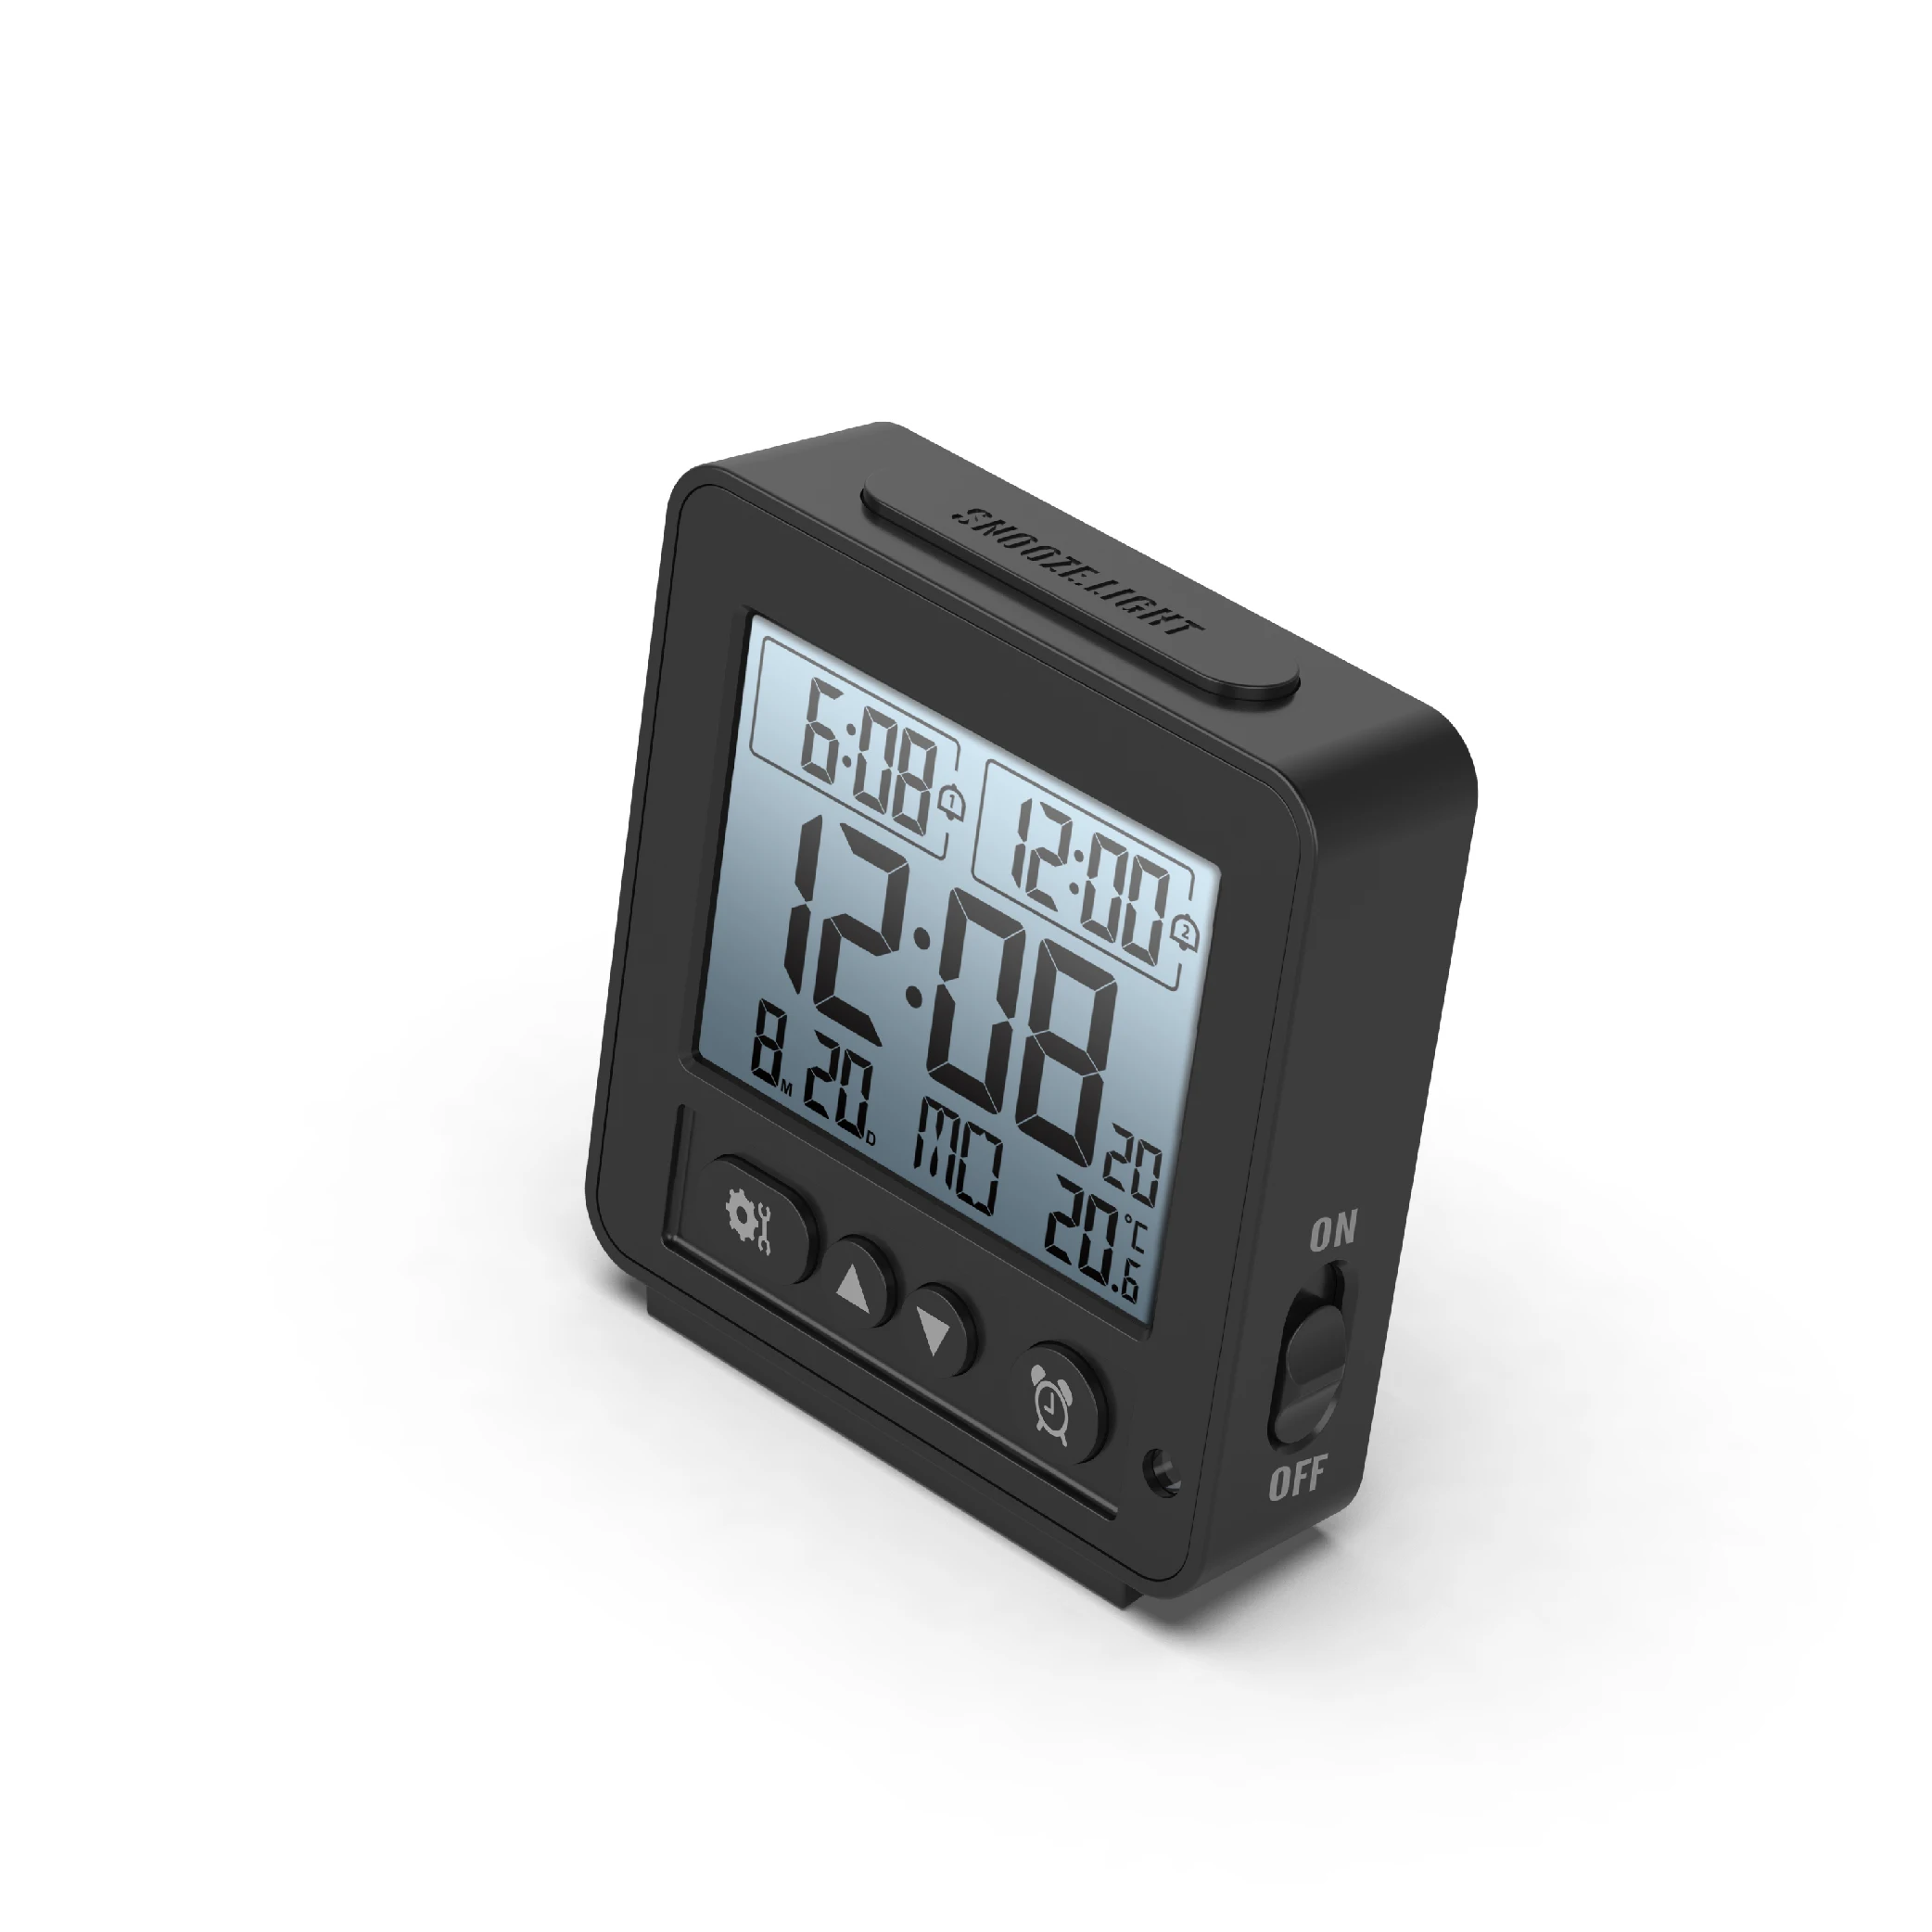 RCC alarm clock wireless indoor outdoor sensor radio controlled clock with sun rise set time moon